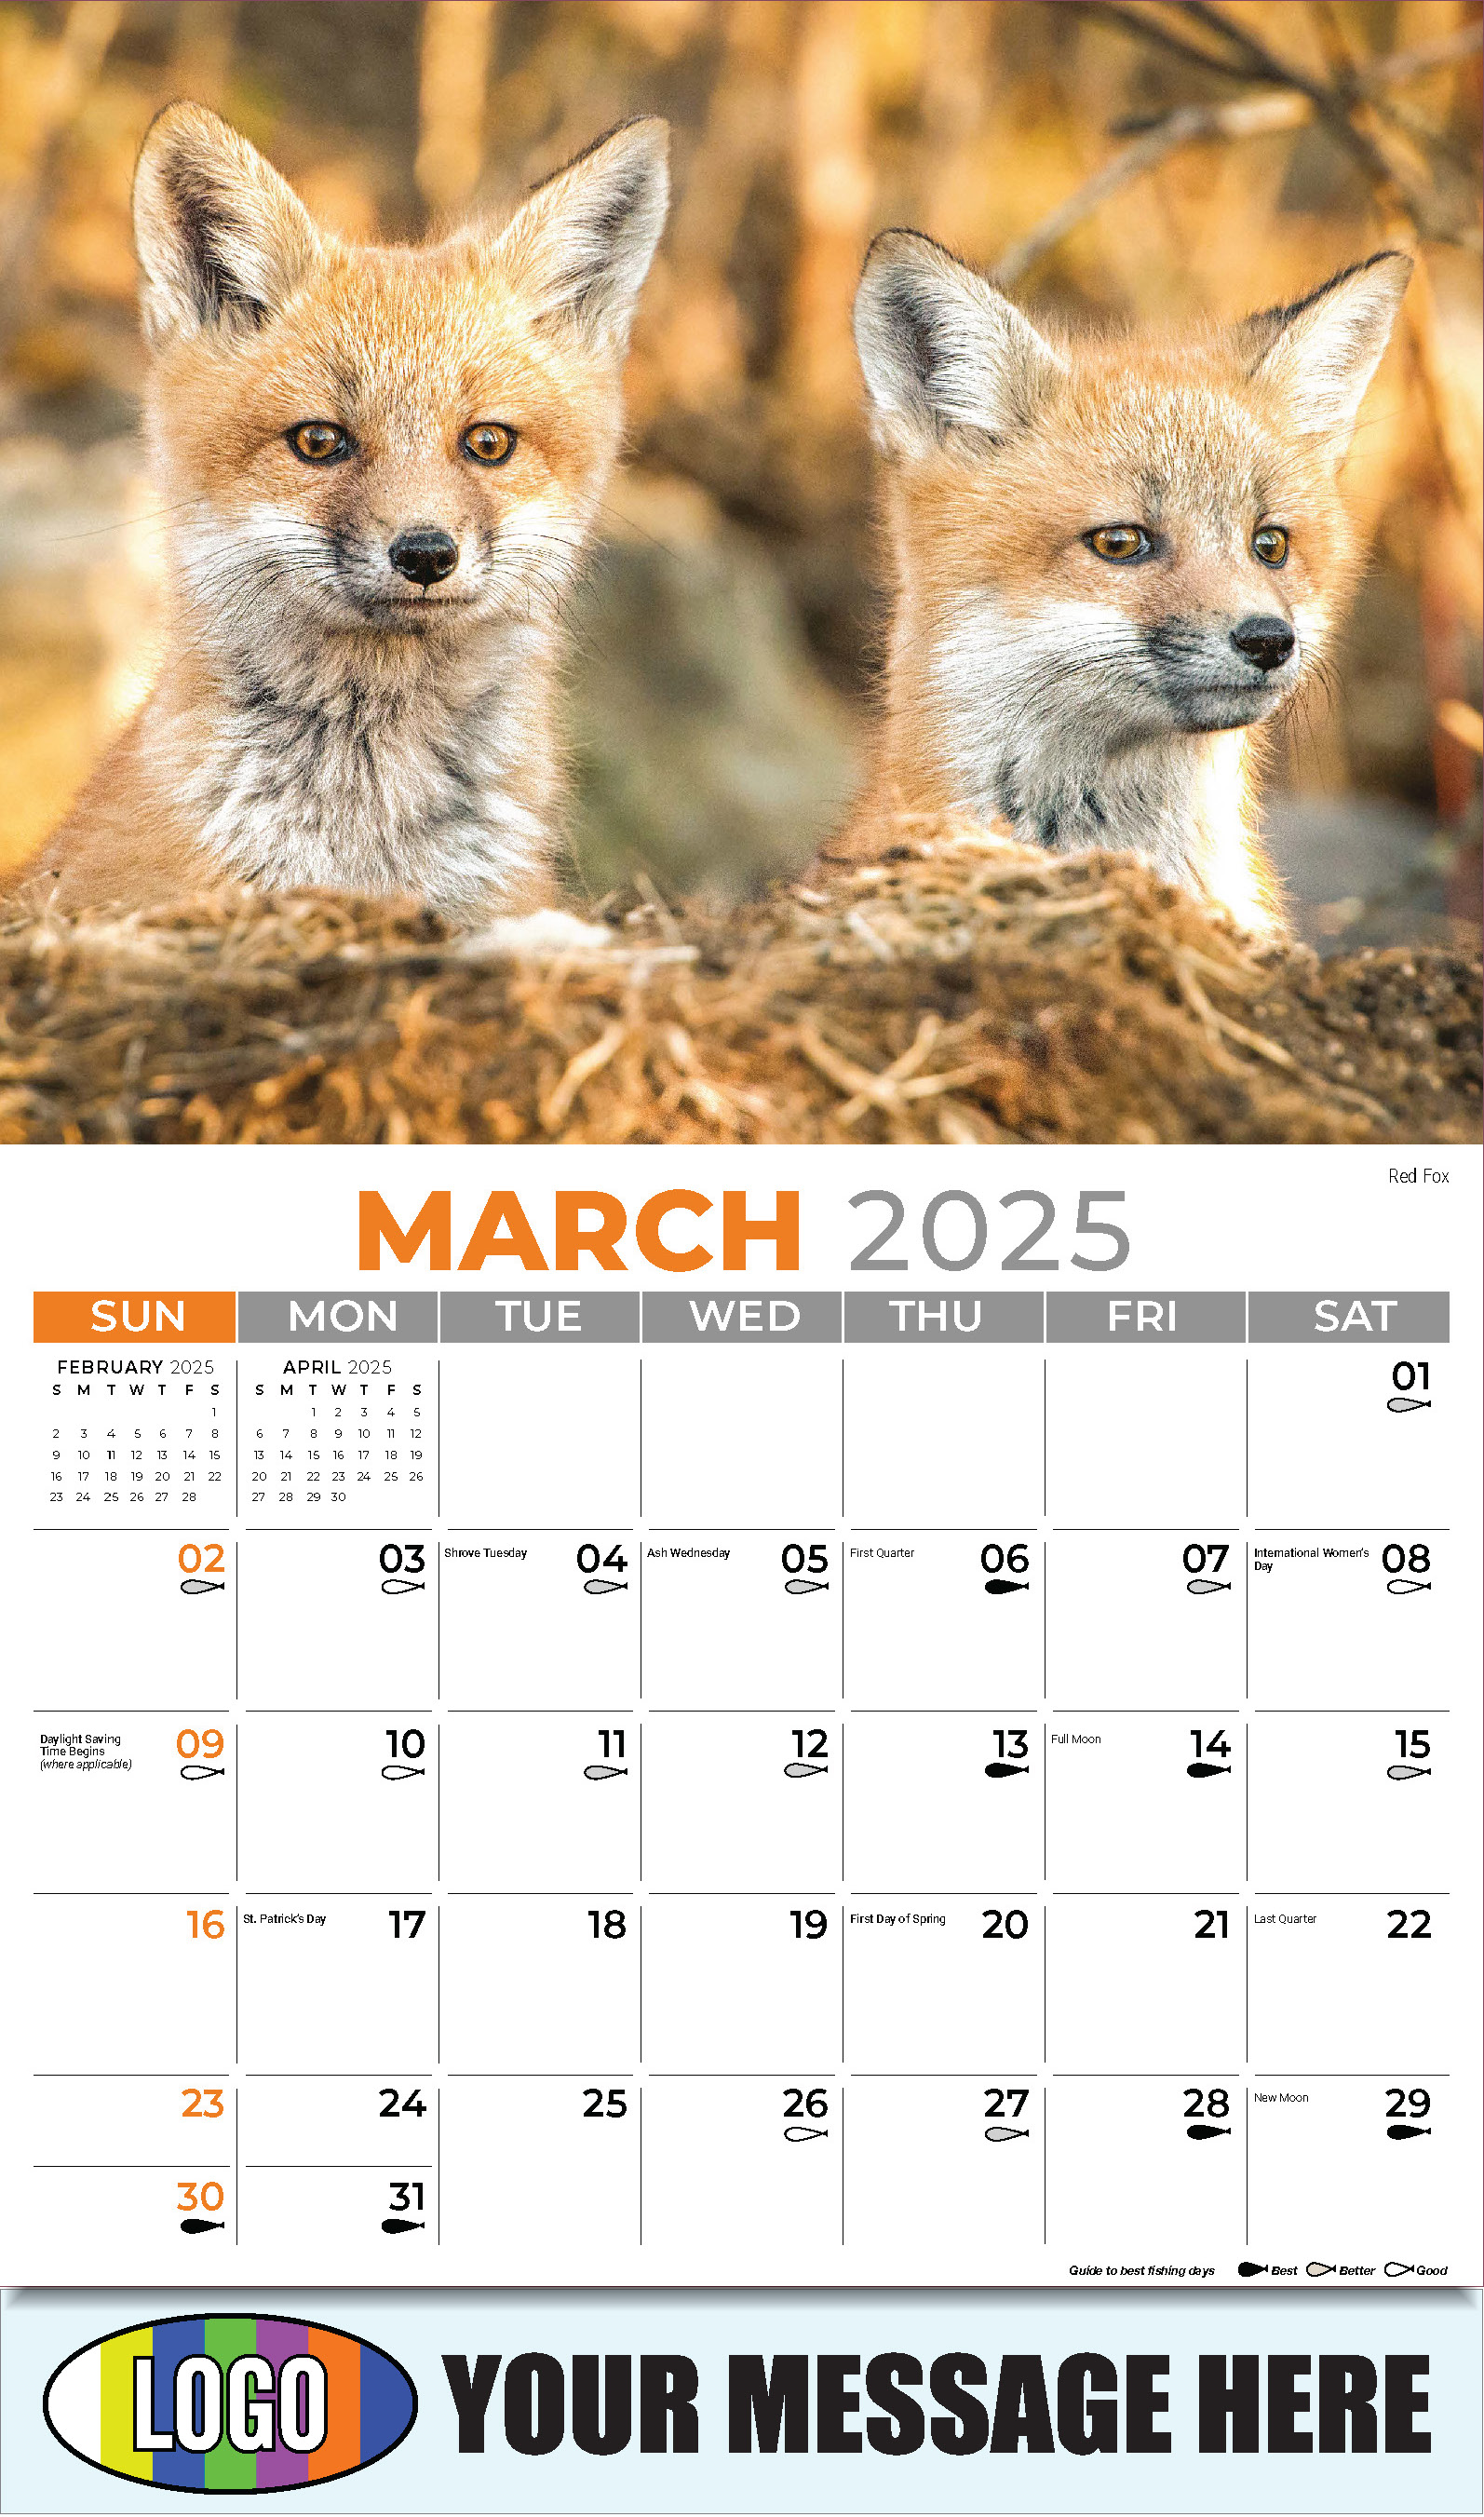 North American Wildlife 2025 Business Promo Wall Calendar - March